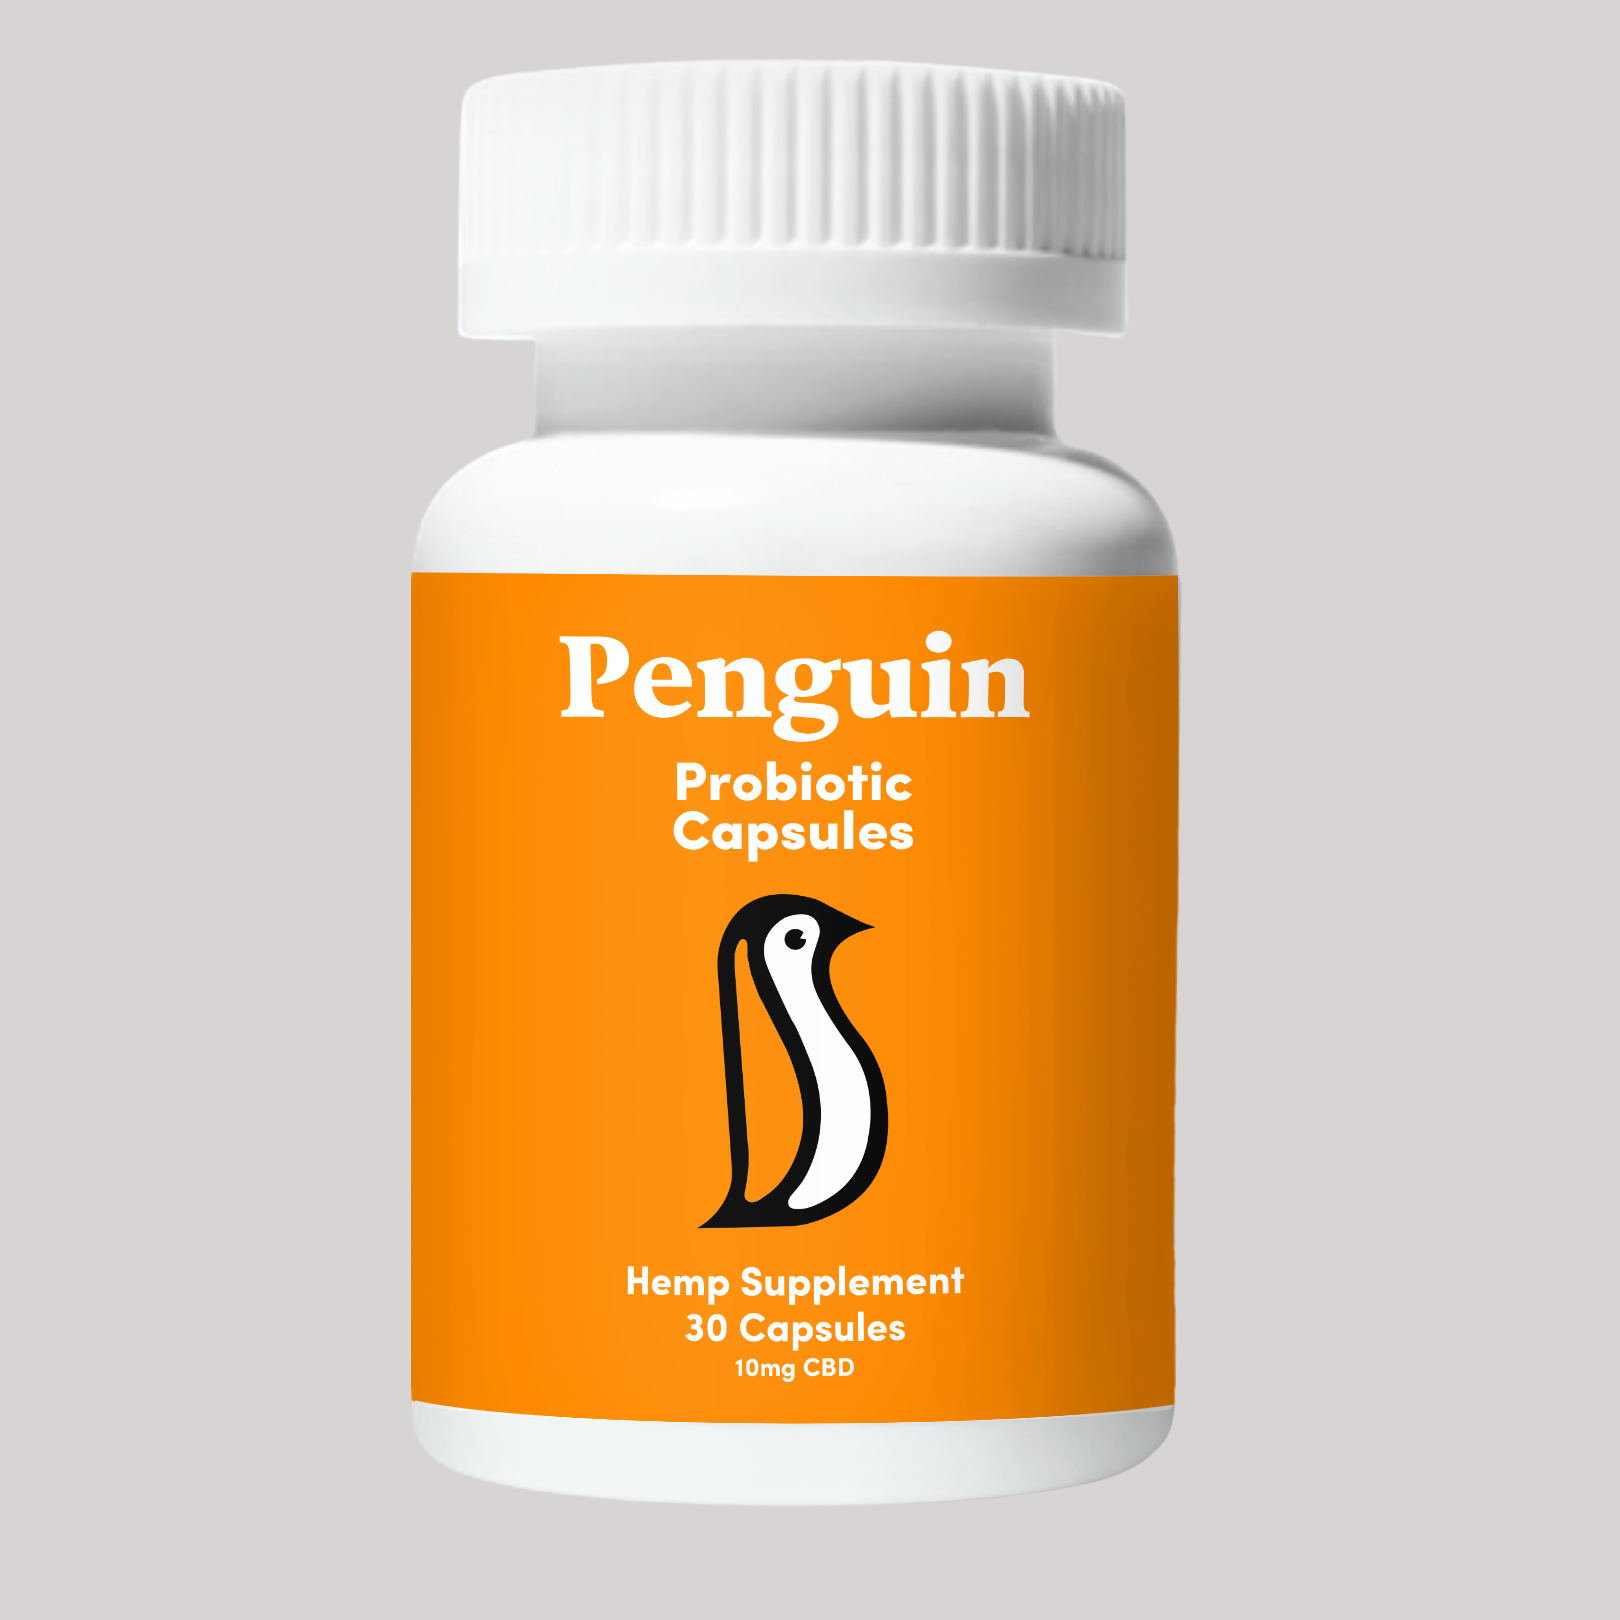 Penguin CBD | undefined